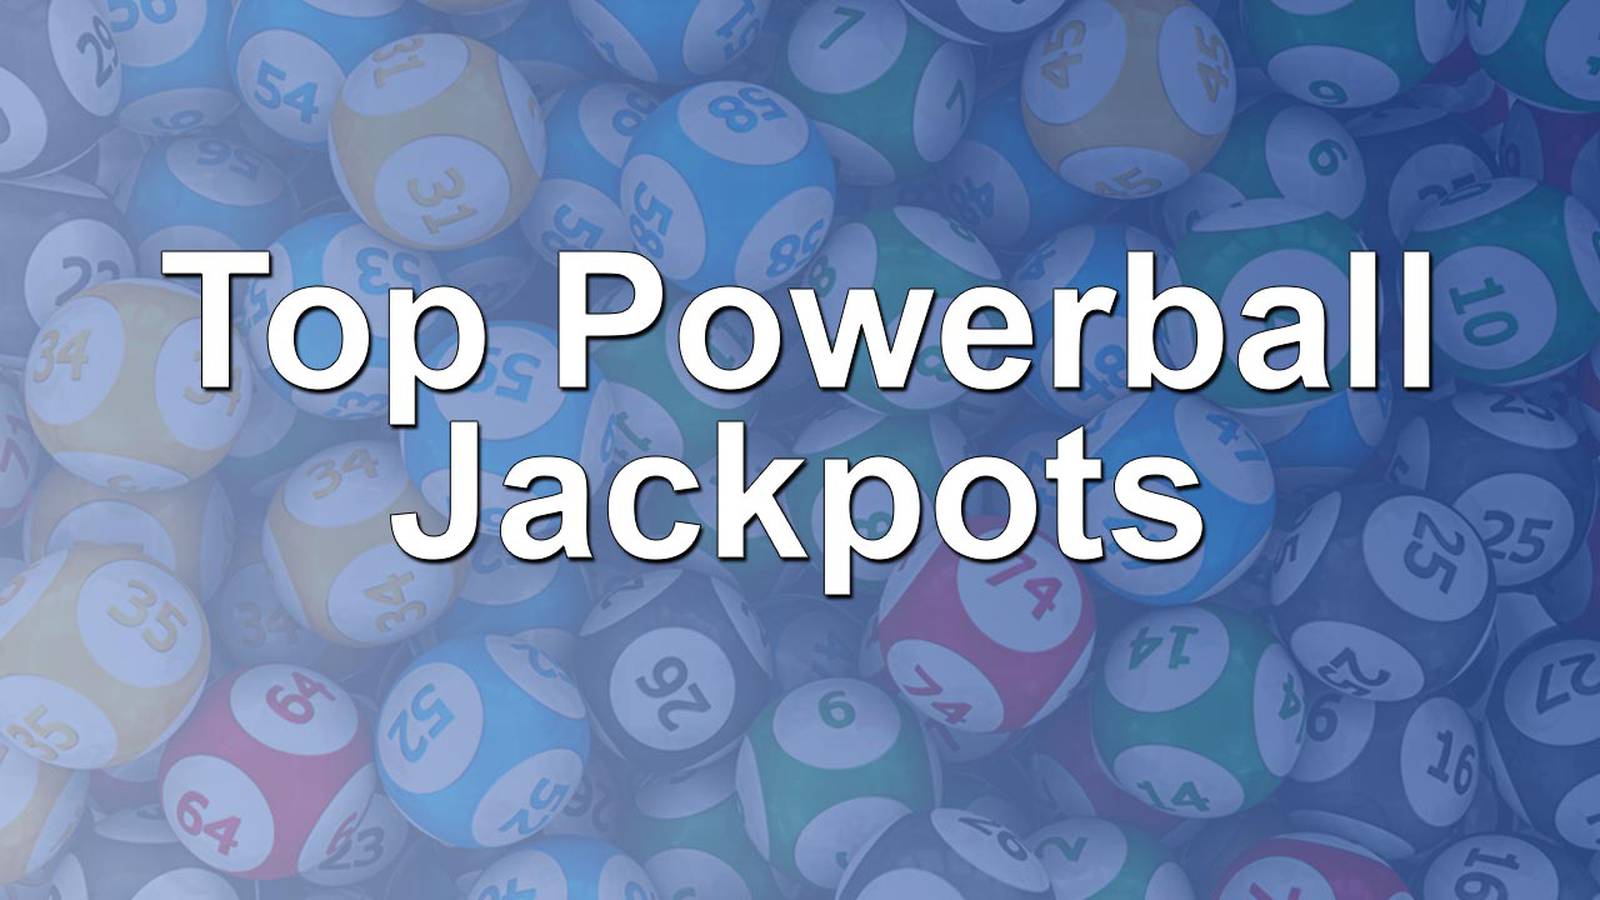 Powerball No grand prize winner as jackpot jumps to 532M Boston 25 News